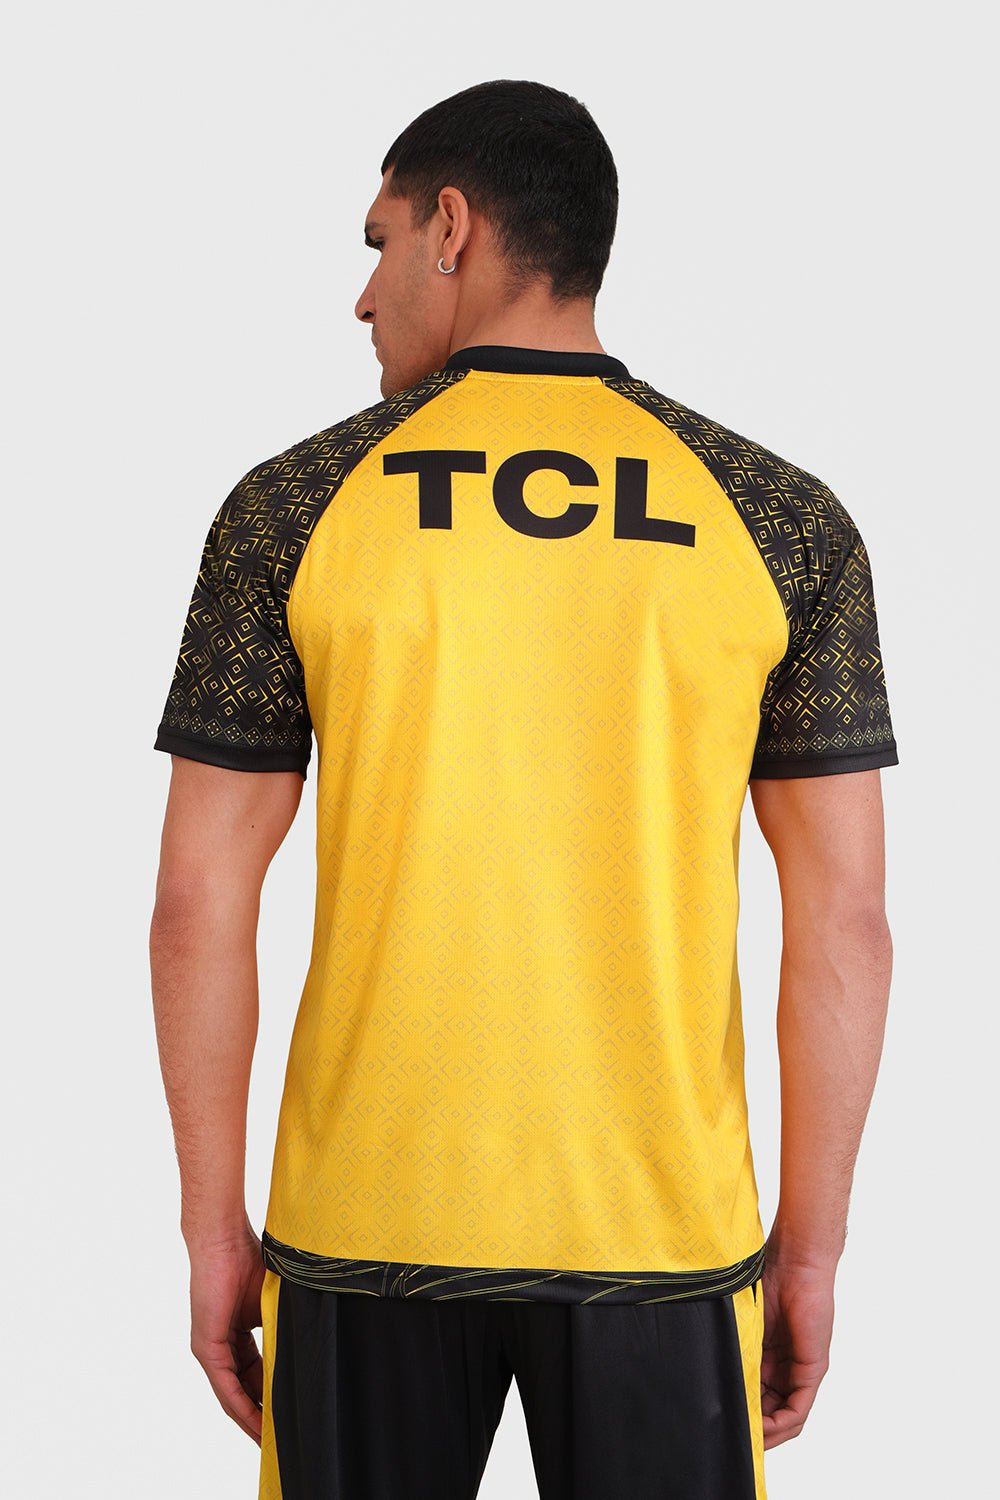 Official PSL 8 Match Day's Playing Jersey - Fan Shirt | Zalmi offical store best psl shirts in pakistan